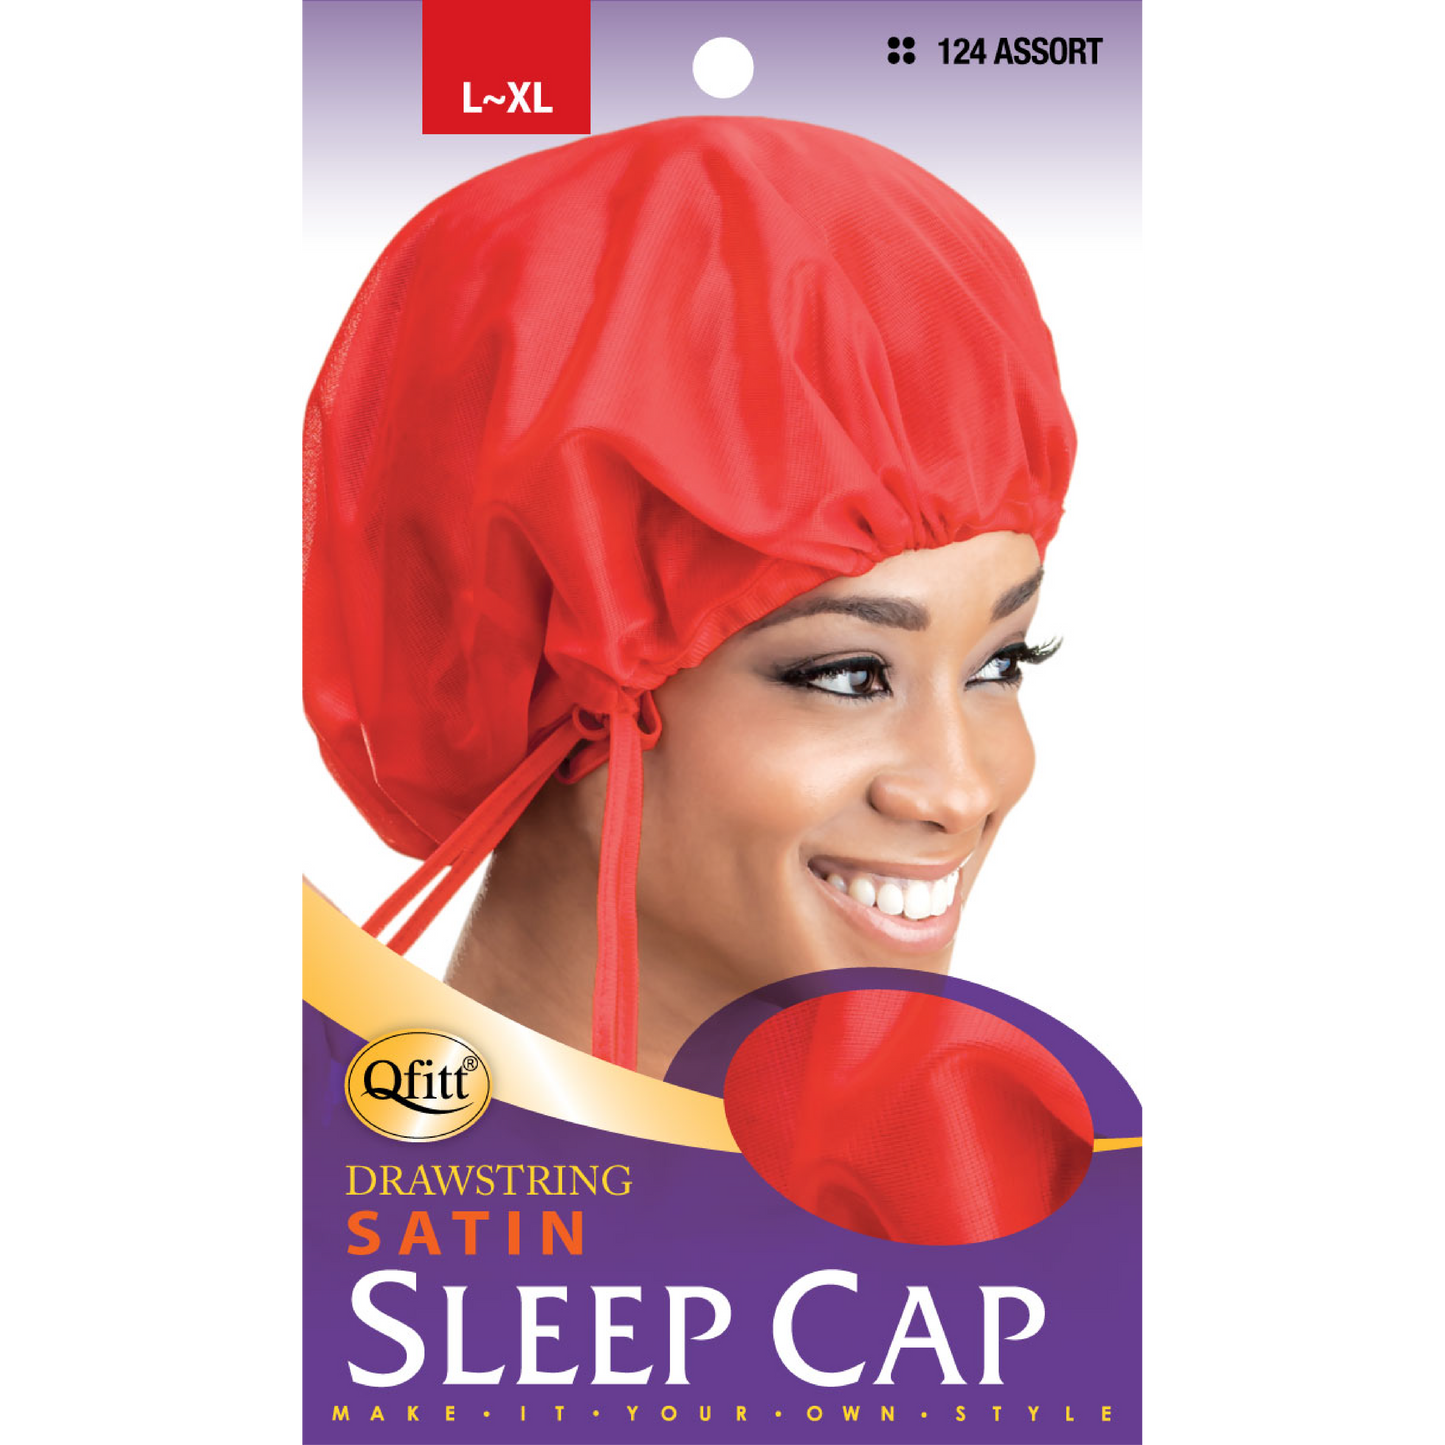 DRAWSTRING SLEEP CAP